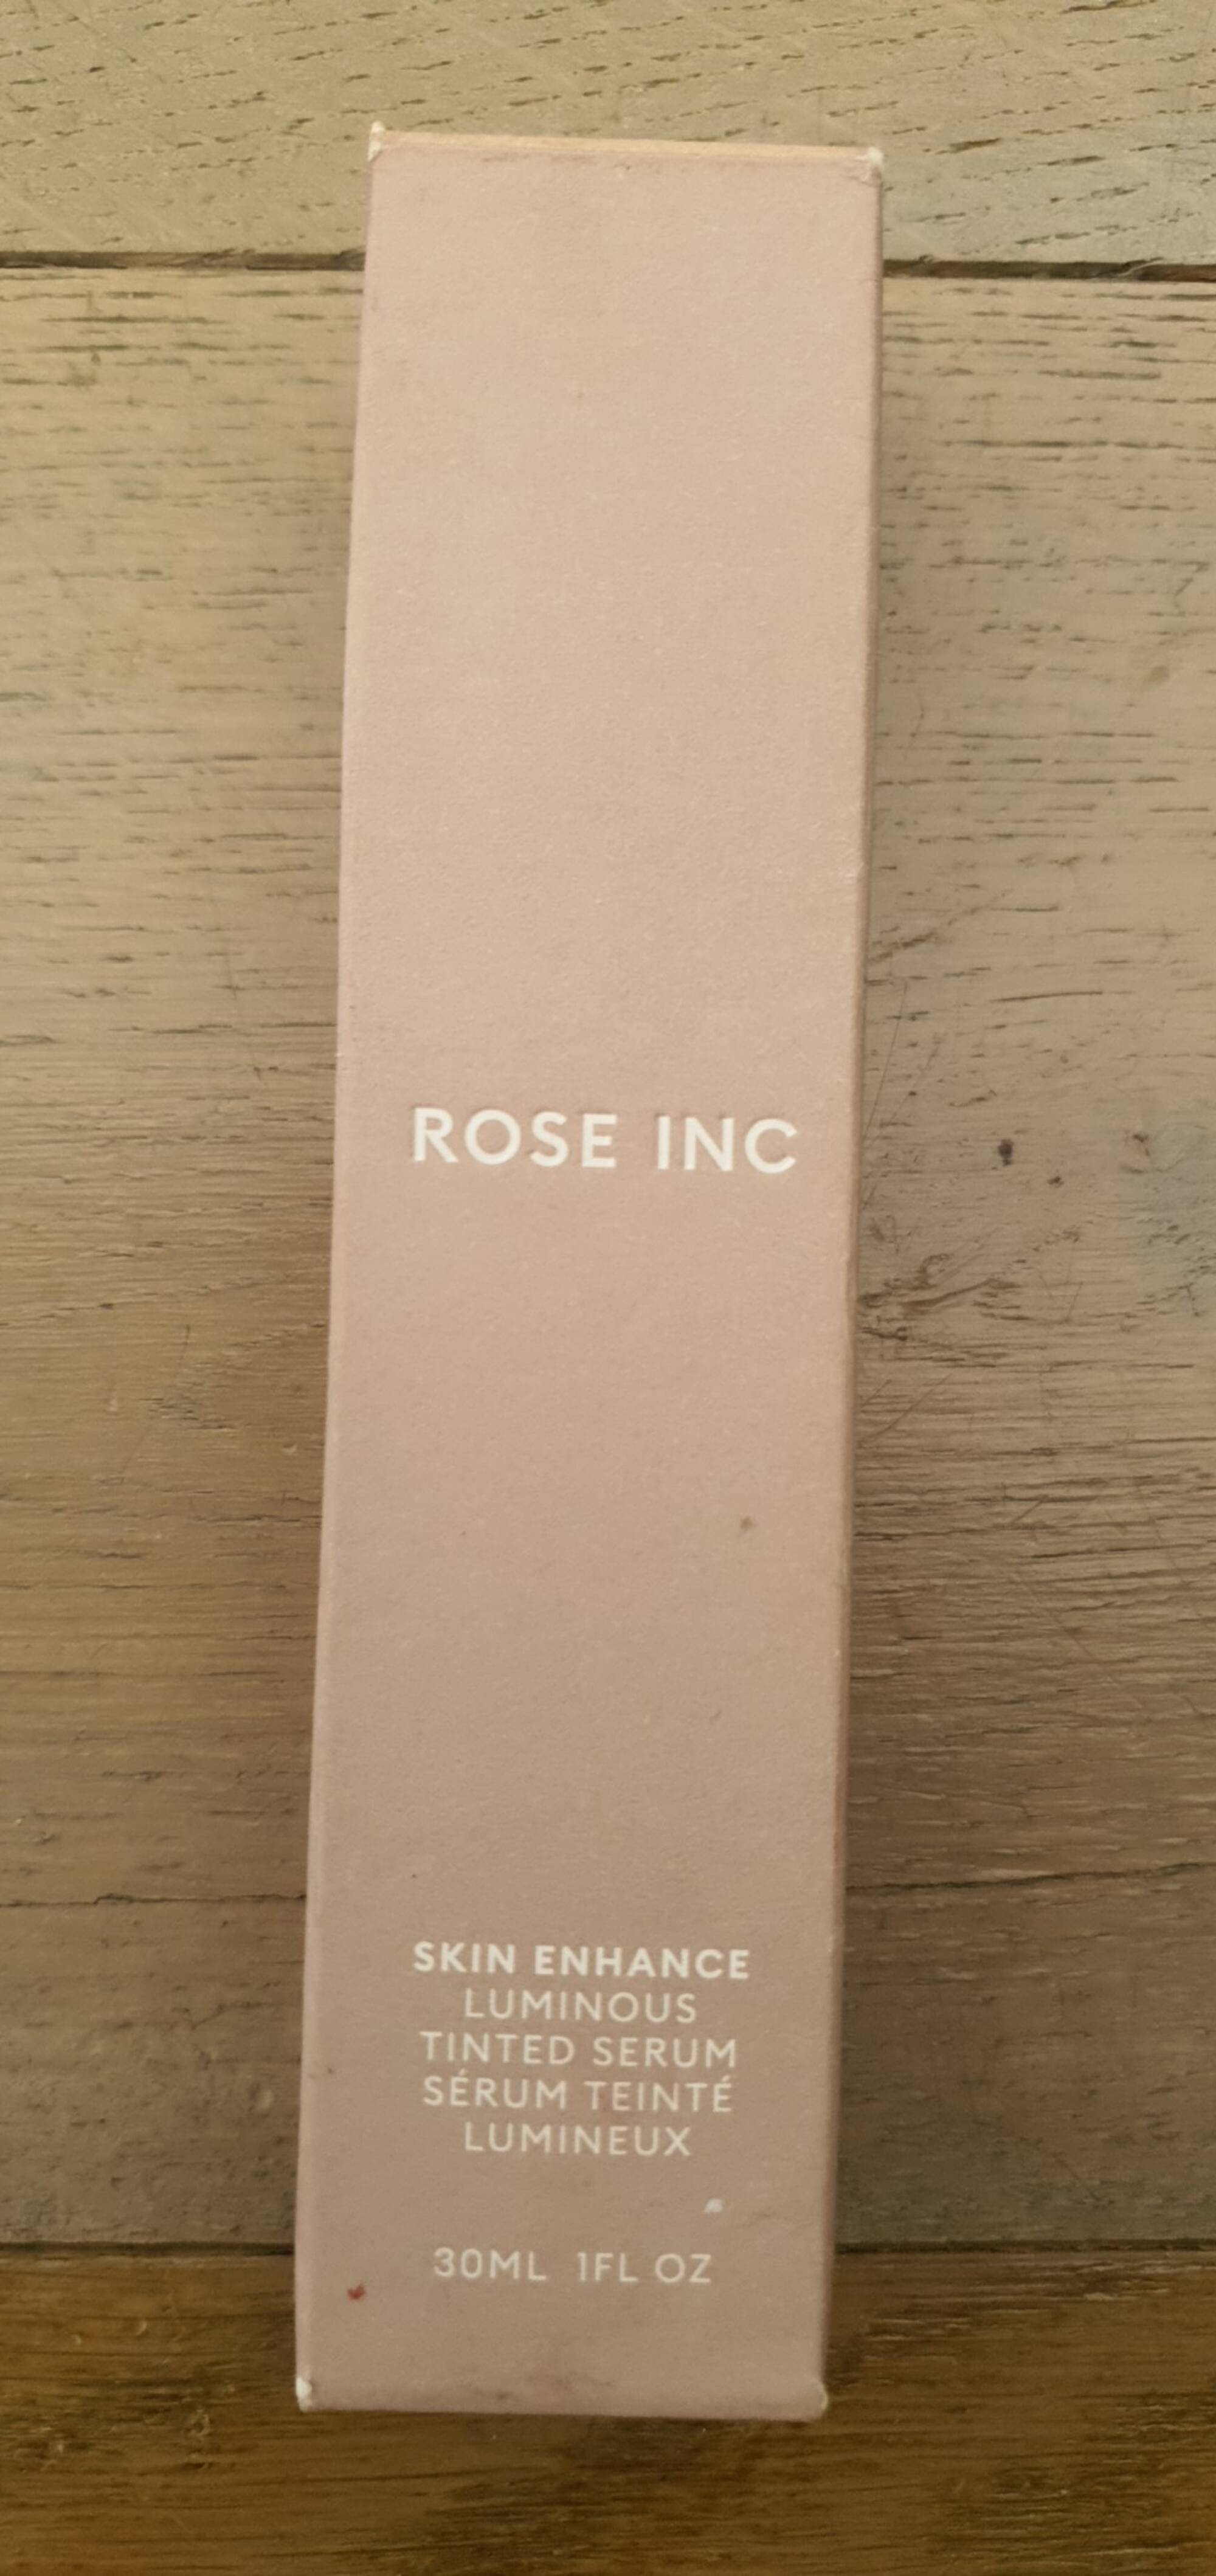 ROSE INC - Skin enhance - Sérum teinté lumineux